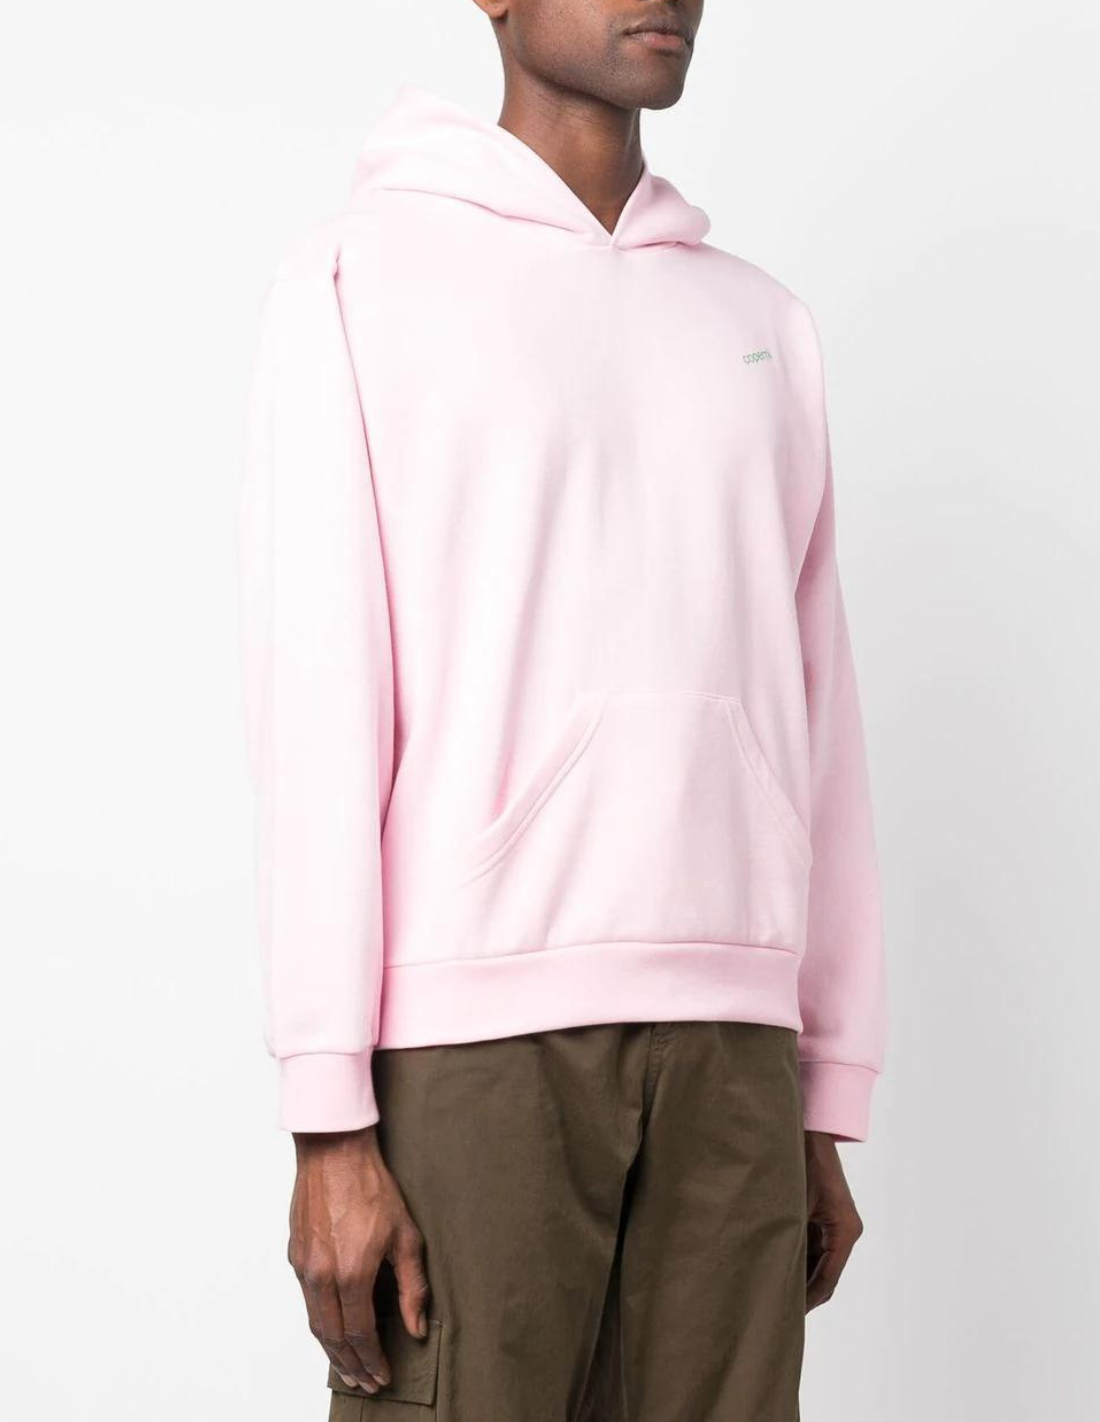 Coperni logo hoodie - pink